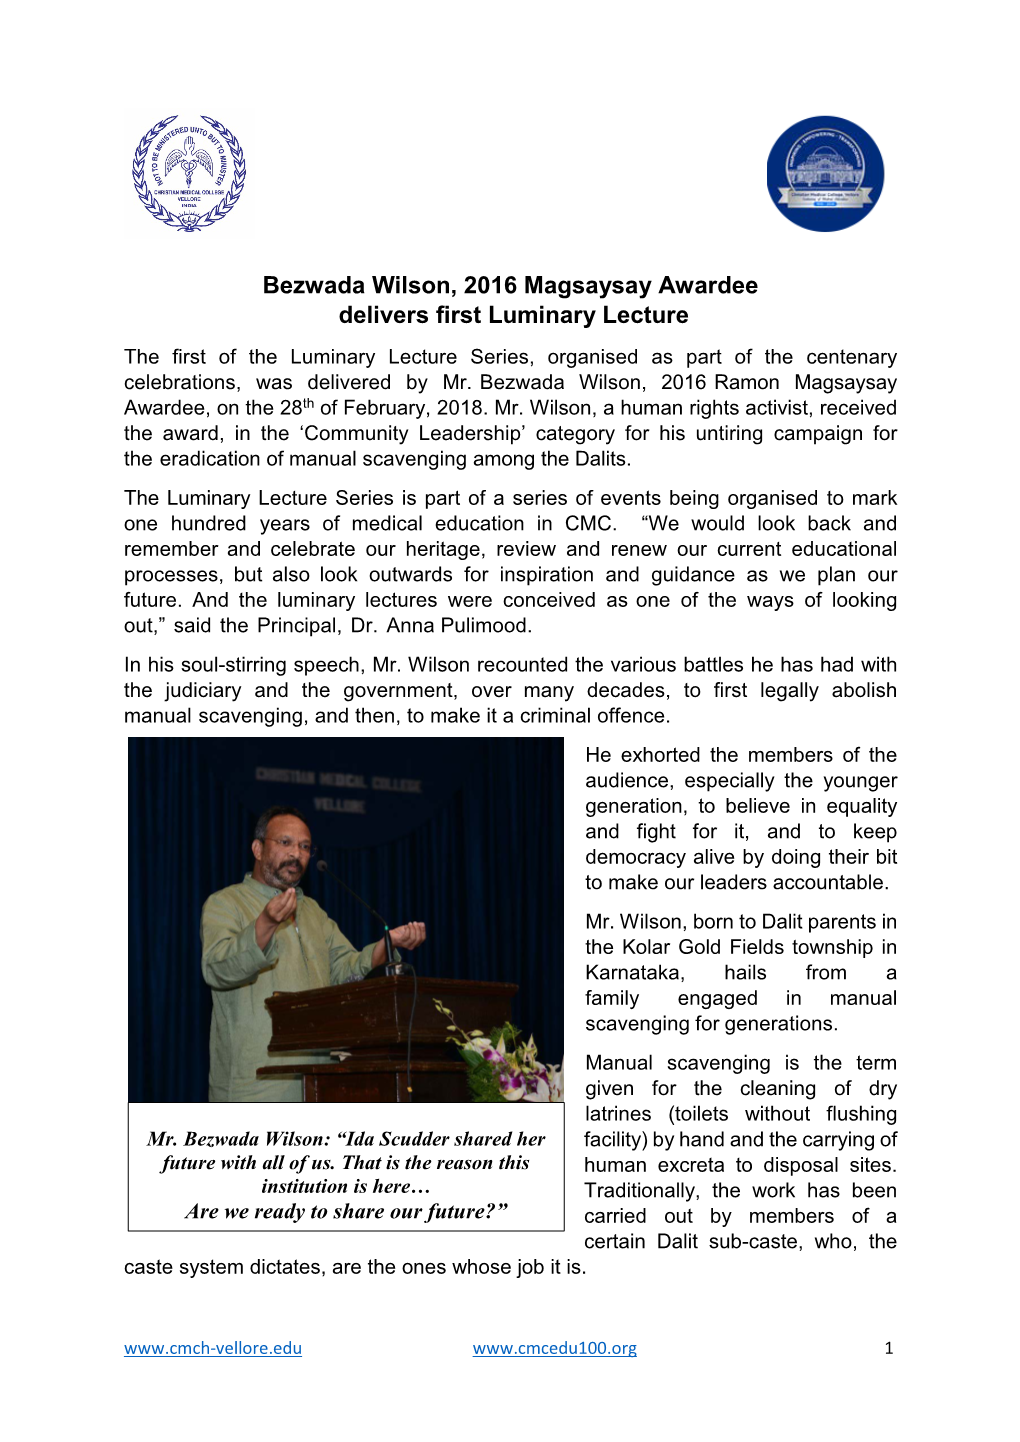 Bezwada Wilson, 2016 Magsaysay Awardee Delivers